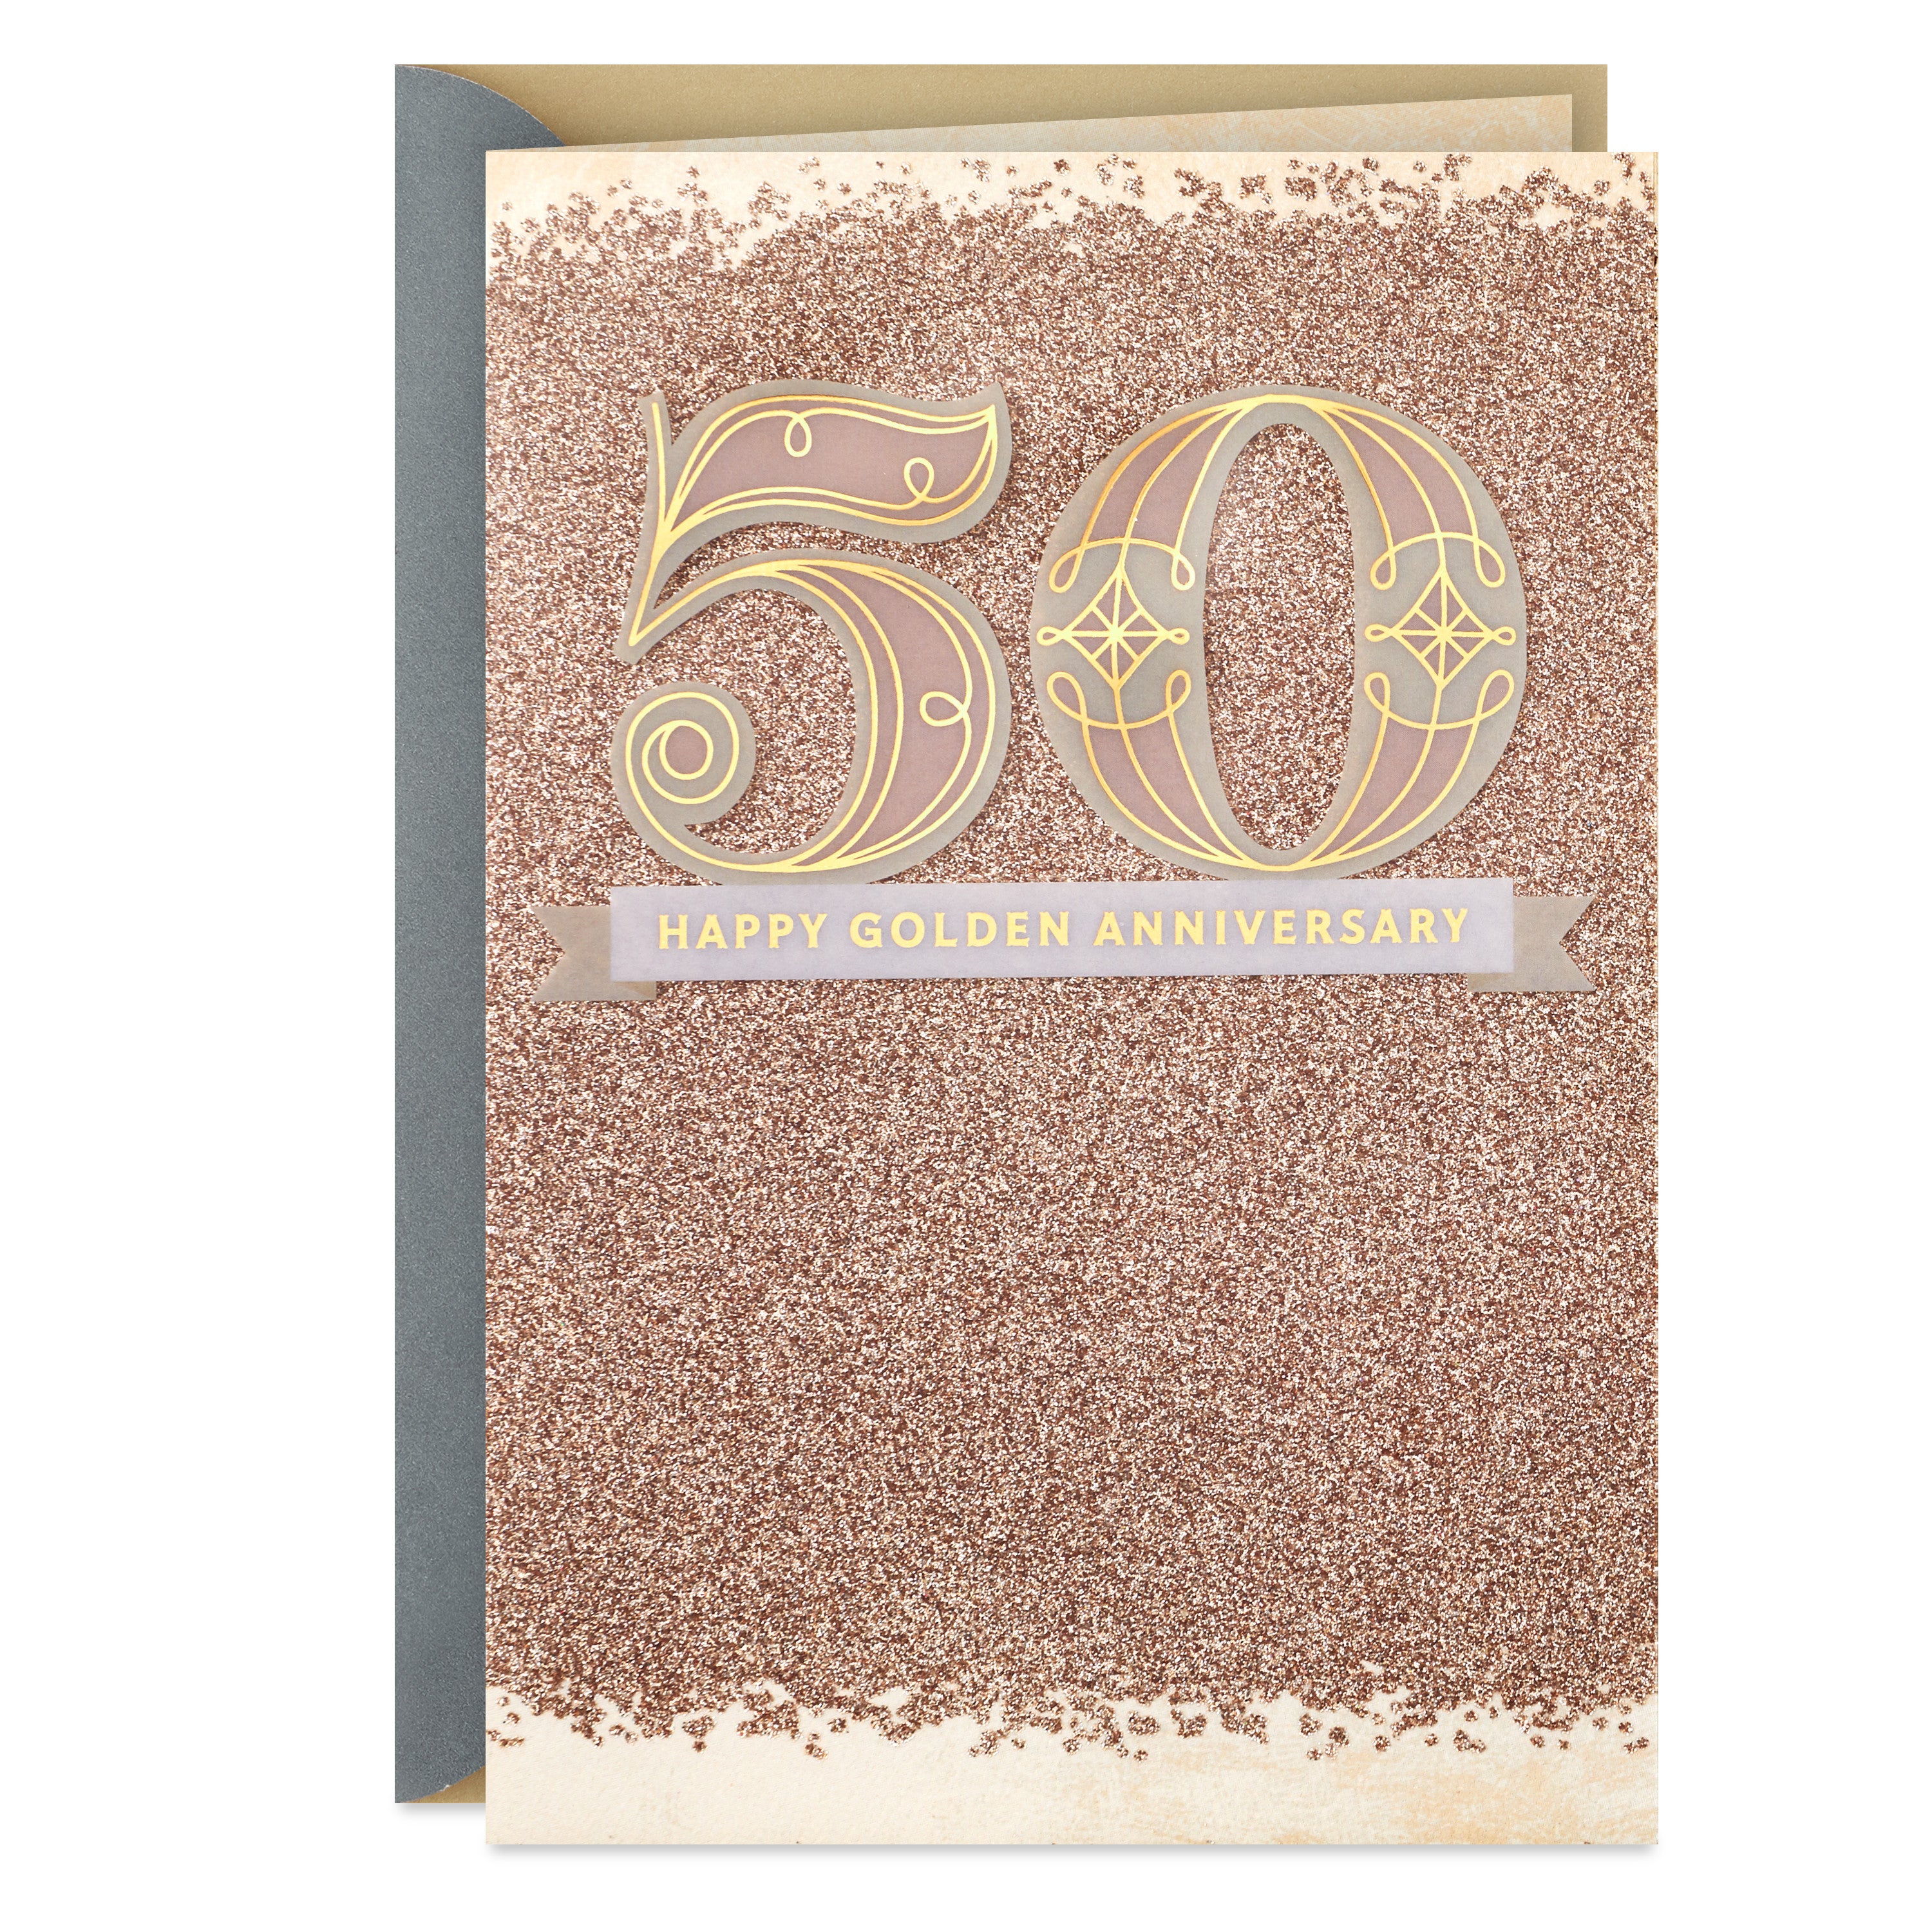 Hallmark 50th Anniversary Card (Golden Anniversary)